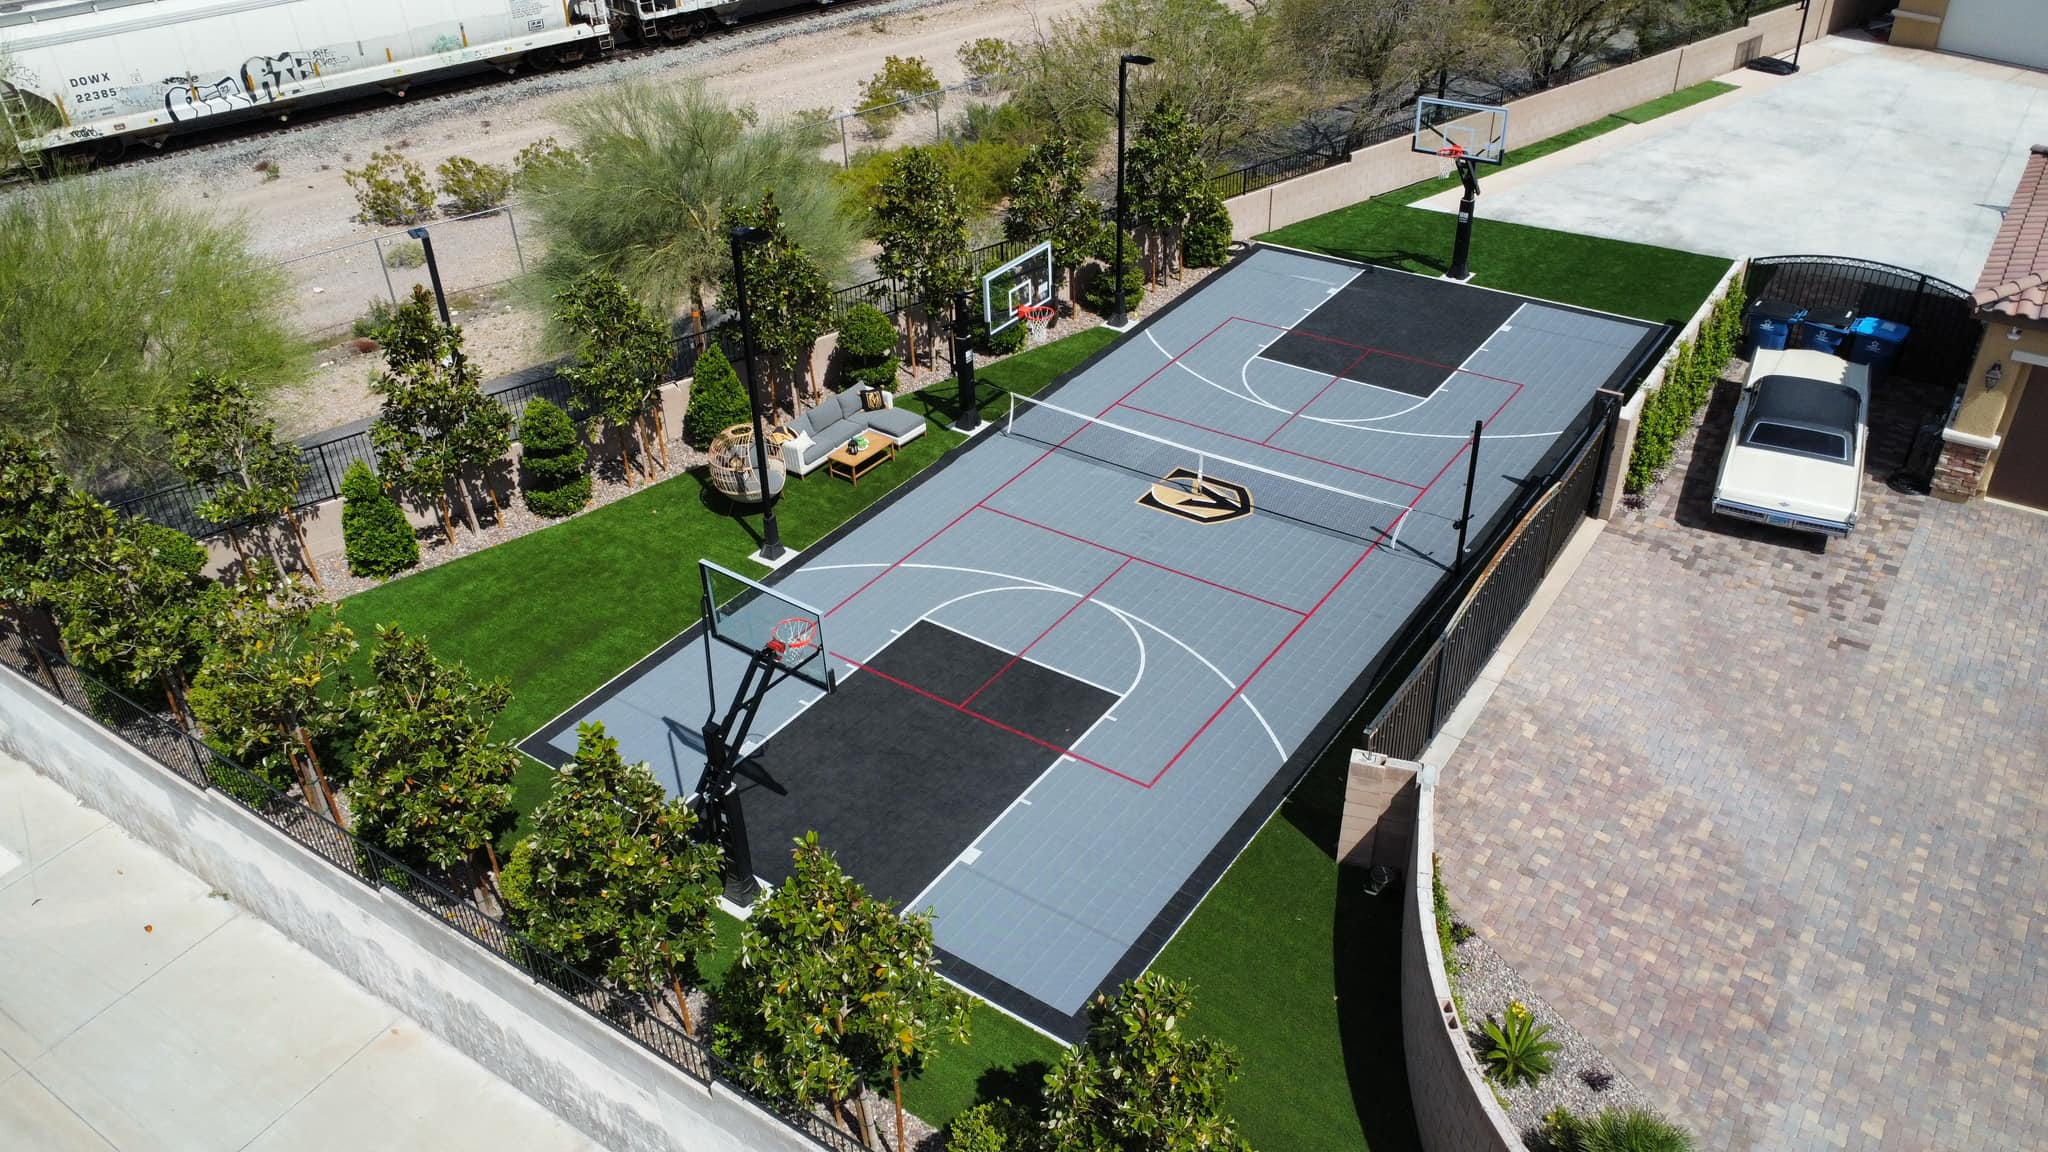 Backyard multisport playable surface